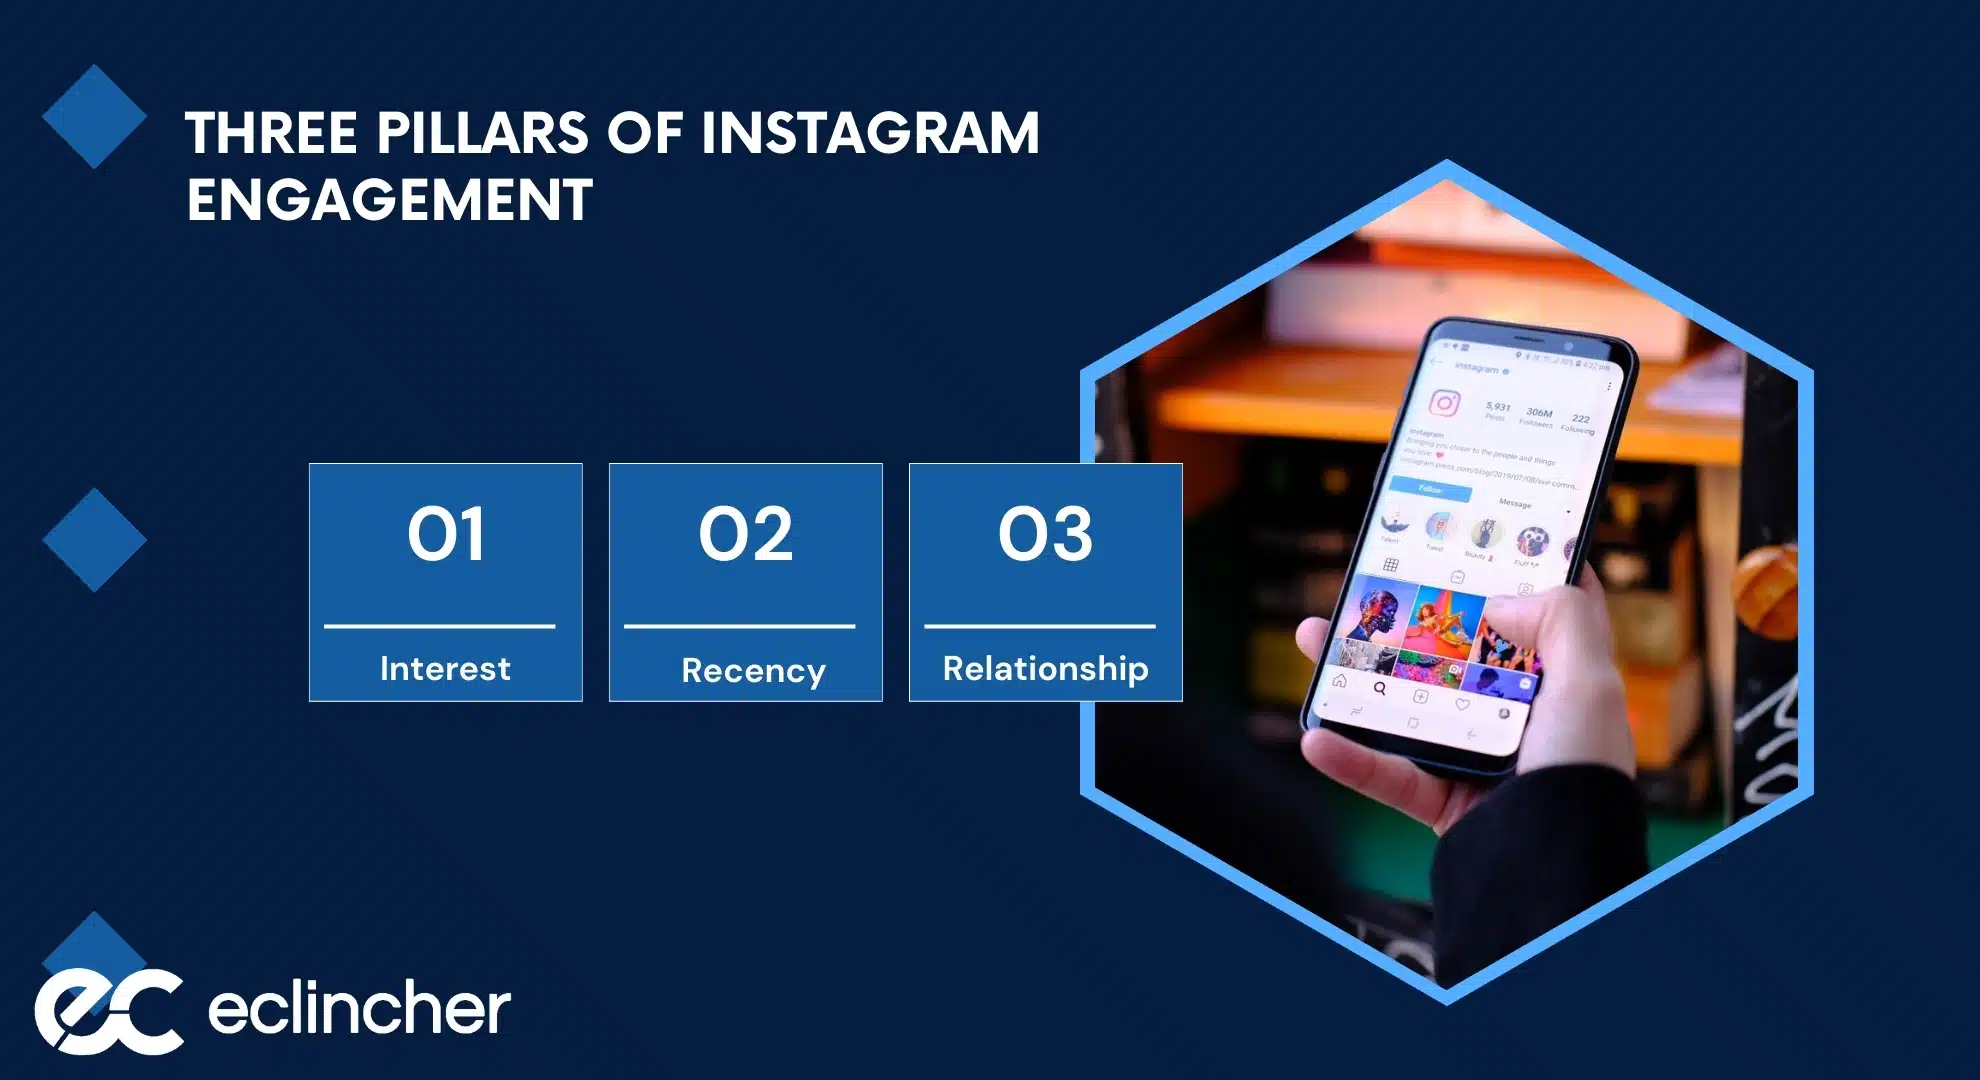 The Three Pillars of Instagram Engagement